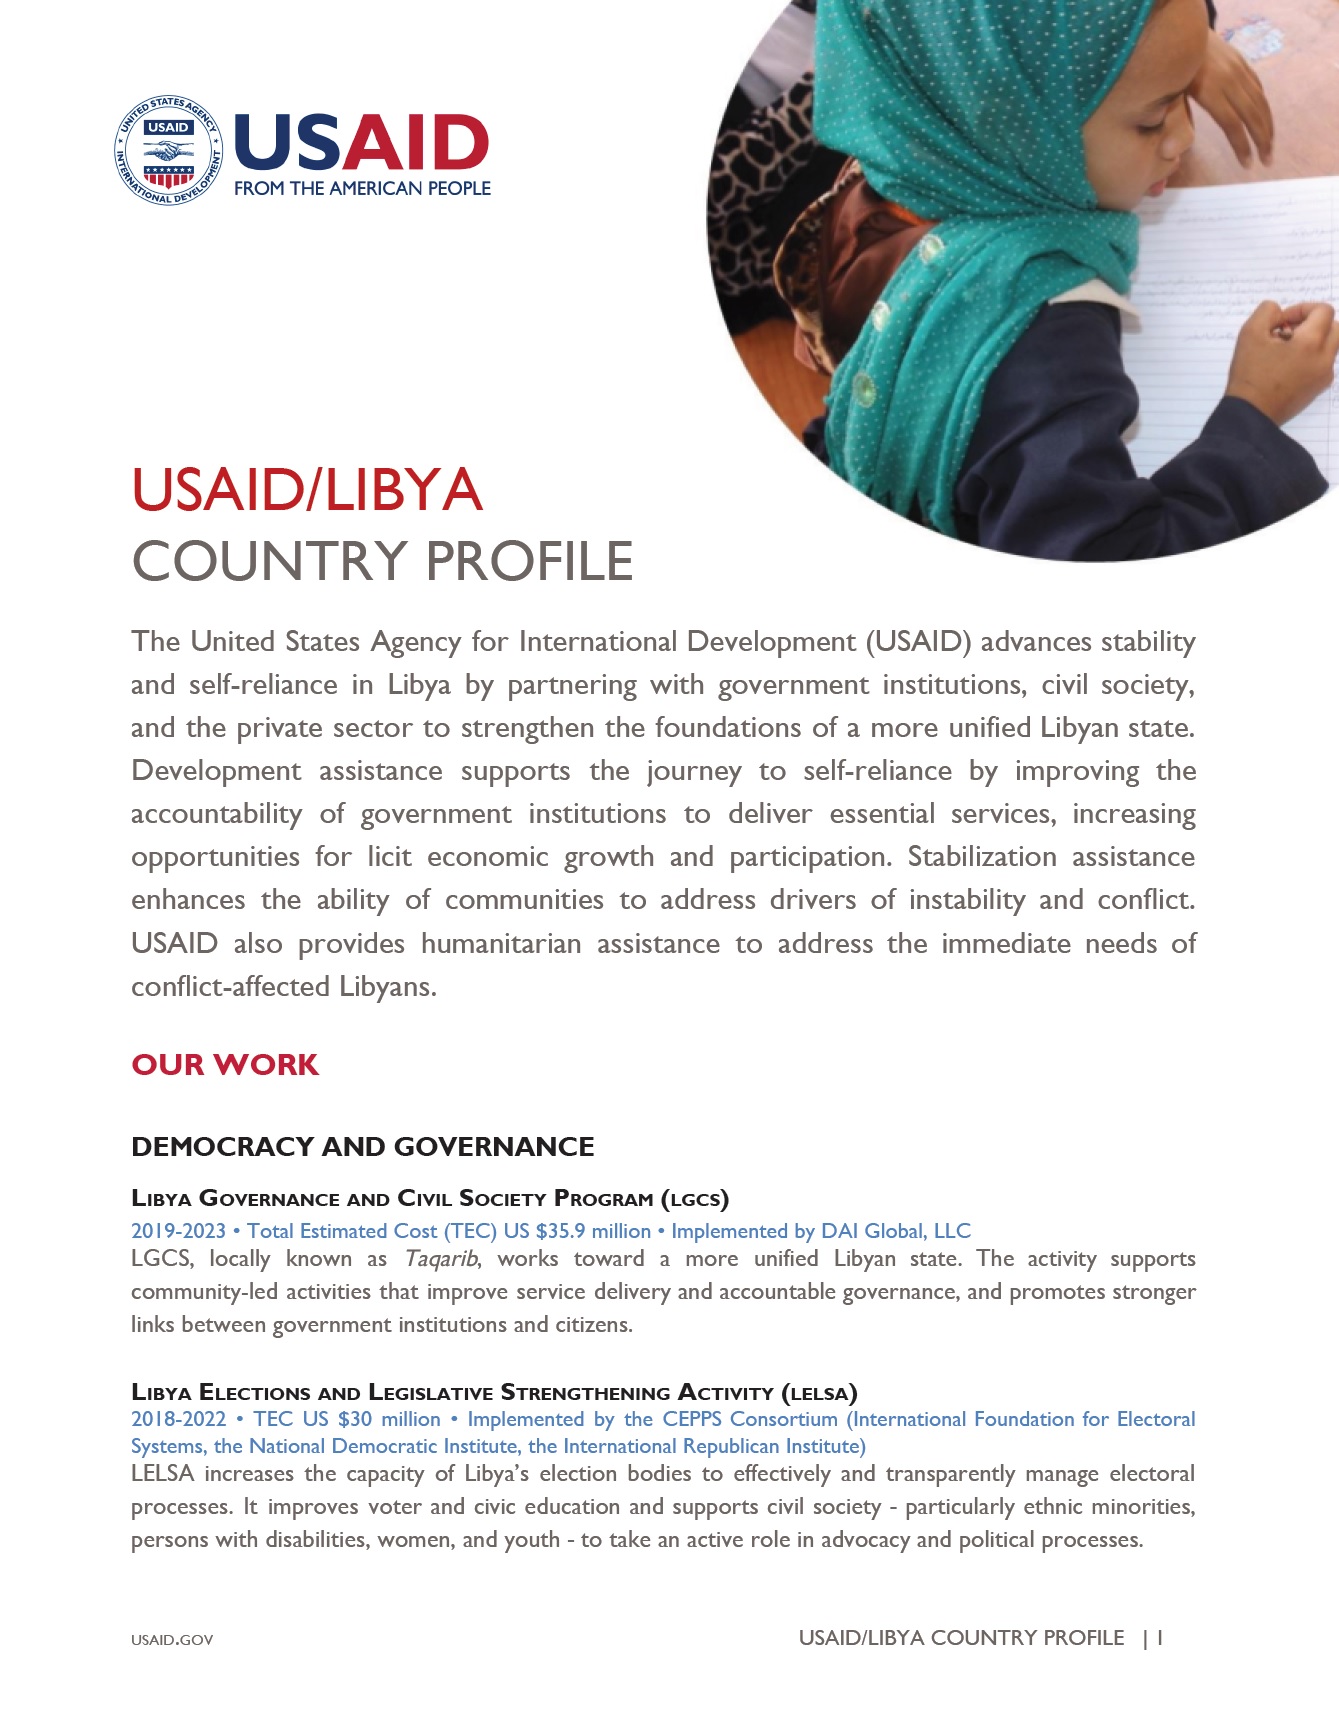 USAID/Libya Country Profile 2020